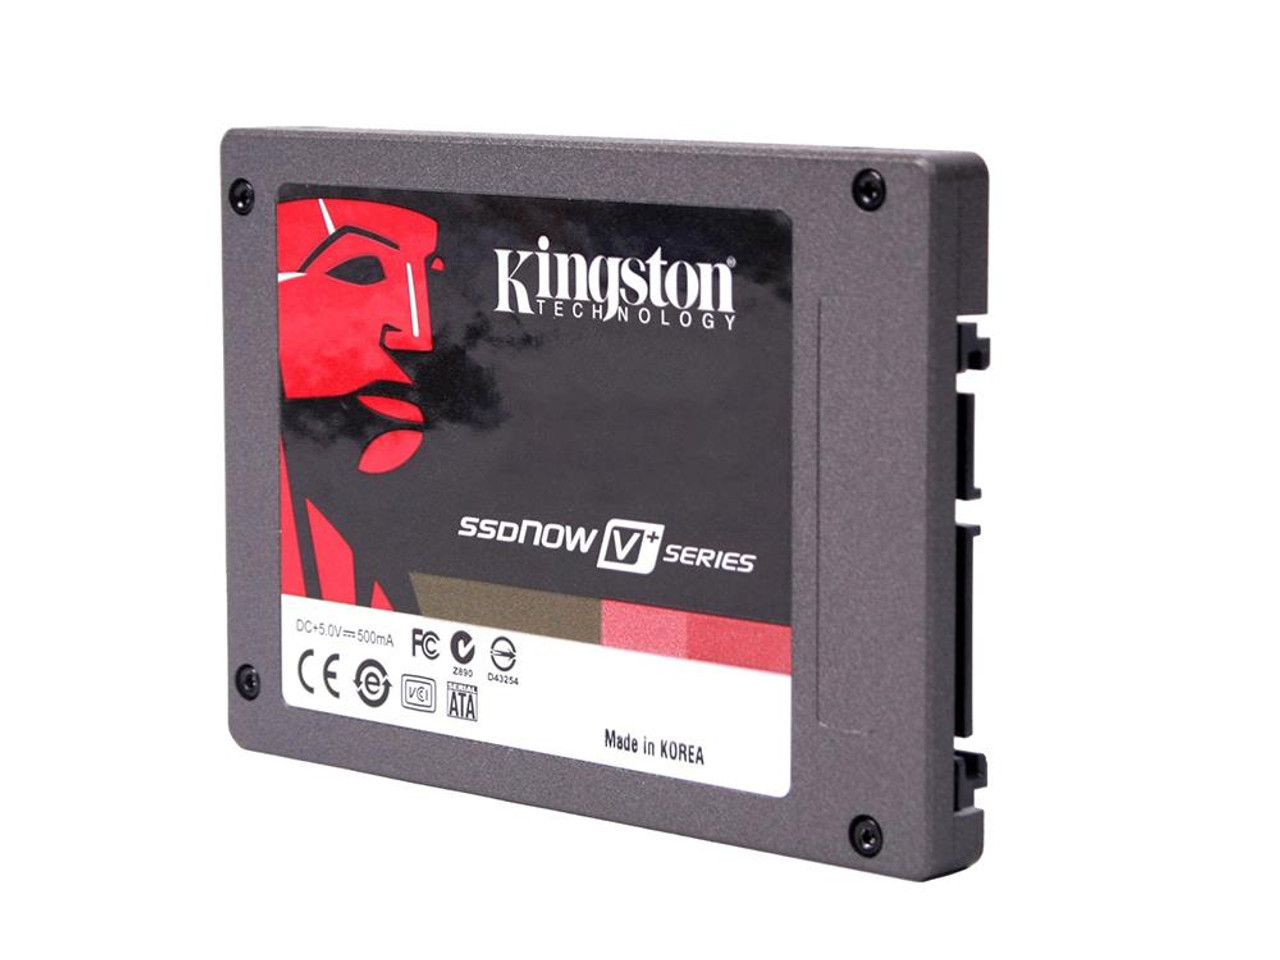 SNVP325-S2B/128GB Kingston SSDNow V+ Series MLC 3Gbps 2.5-inch Internal Solid State